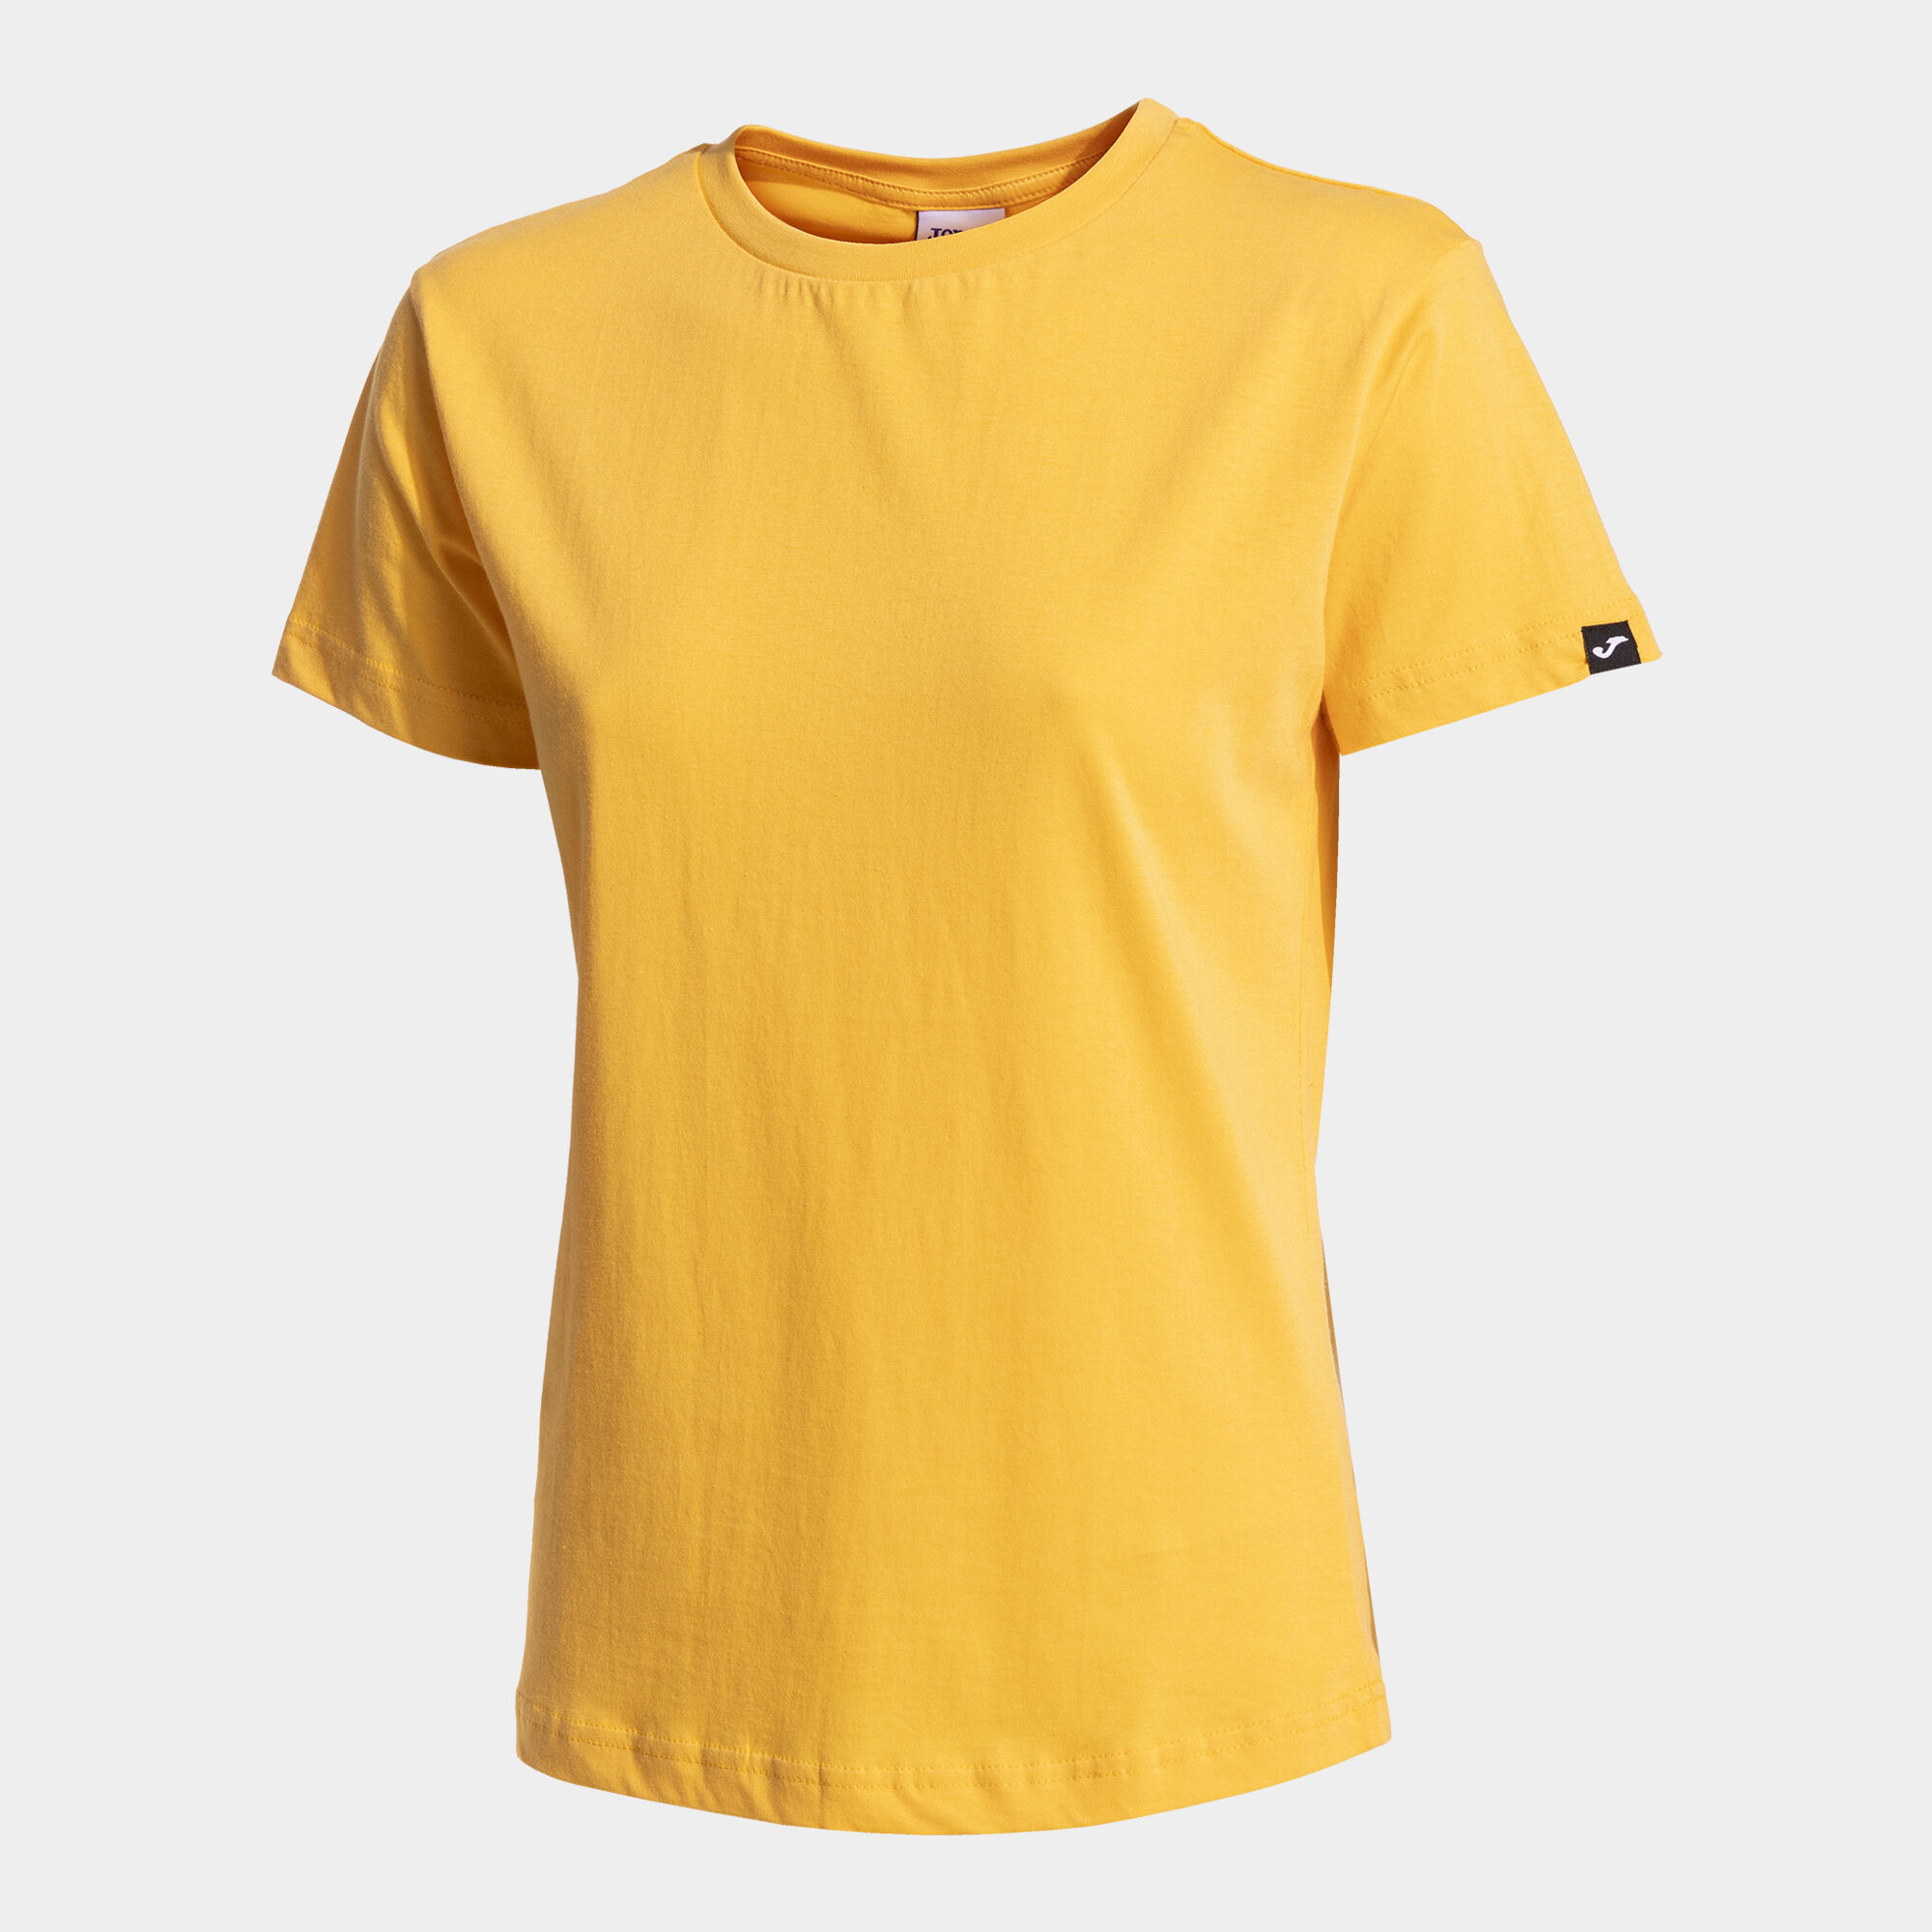 Shirt short sleeve woman Desert orange